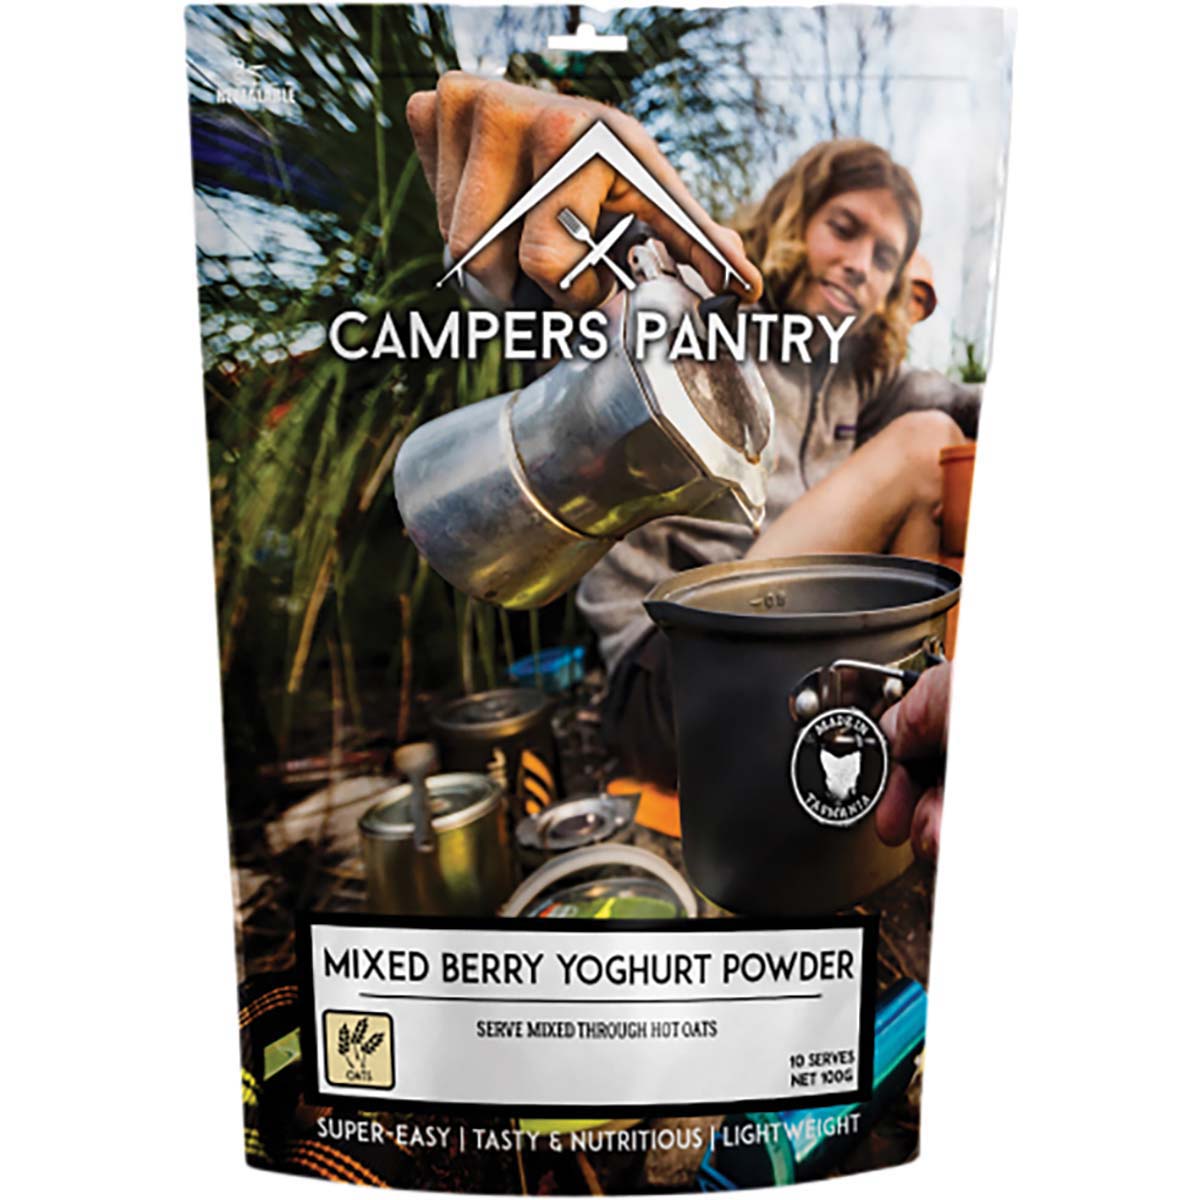 Campers Pantry Mixed Berry Yoghurt Powder 10 Serves